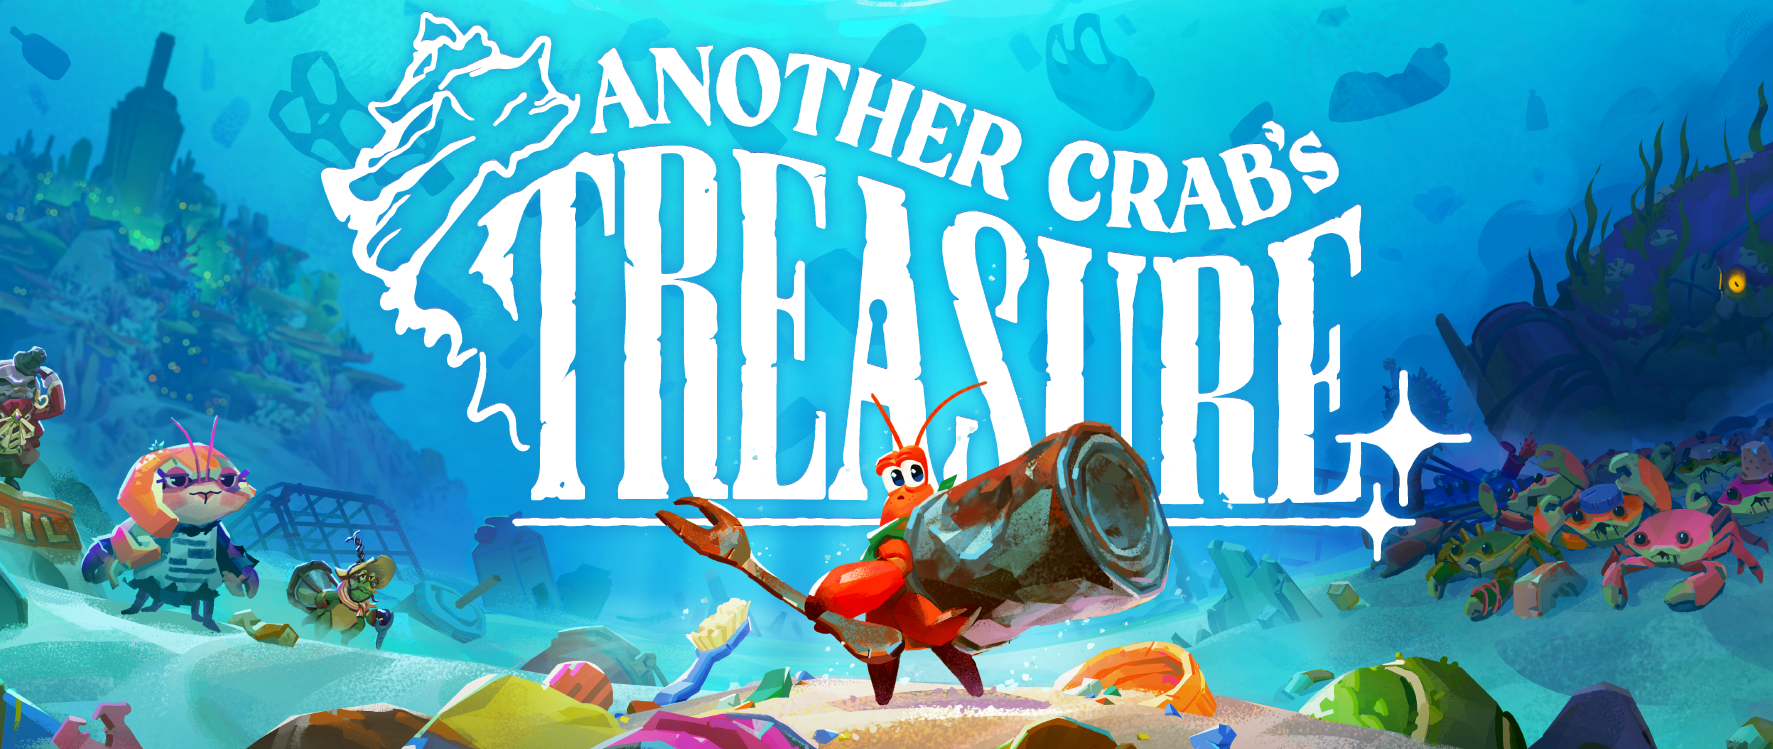 Another Crabs Treasure - №14 сила тока и круиз на корабле!